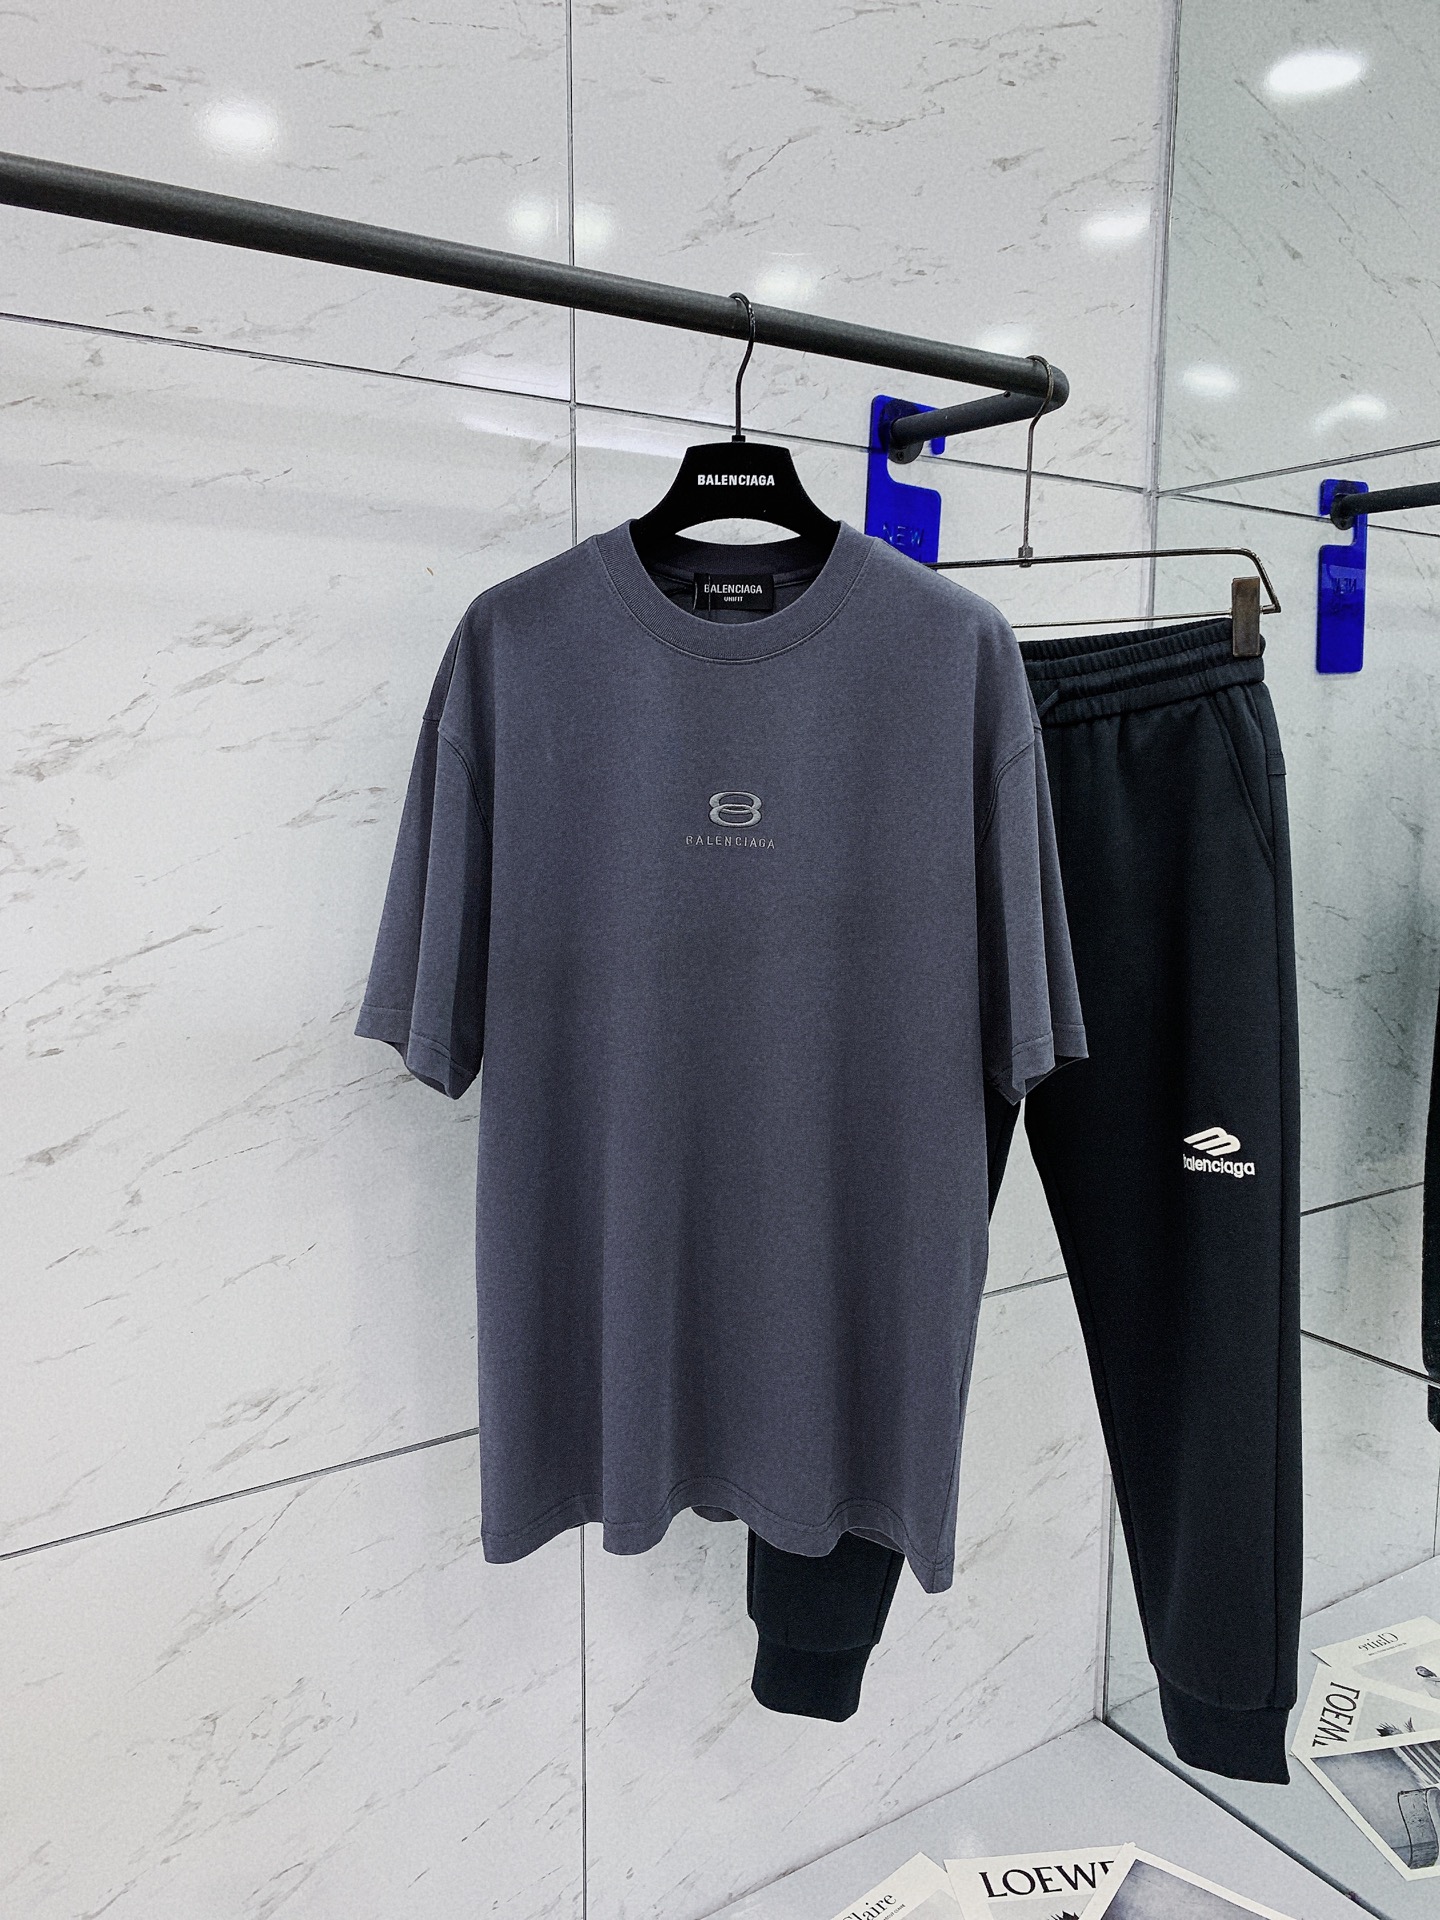 Balenciaga Clothing T-Shirt Embroidery Unisex Spring/Summer Collection Fashion Short Sleeve